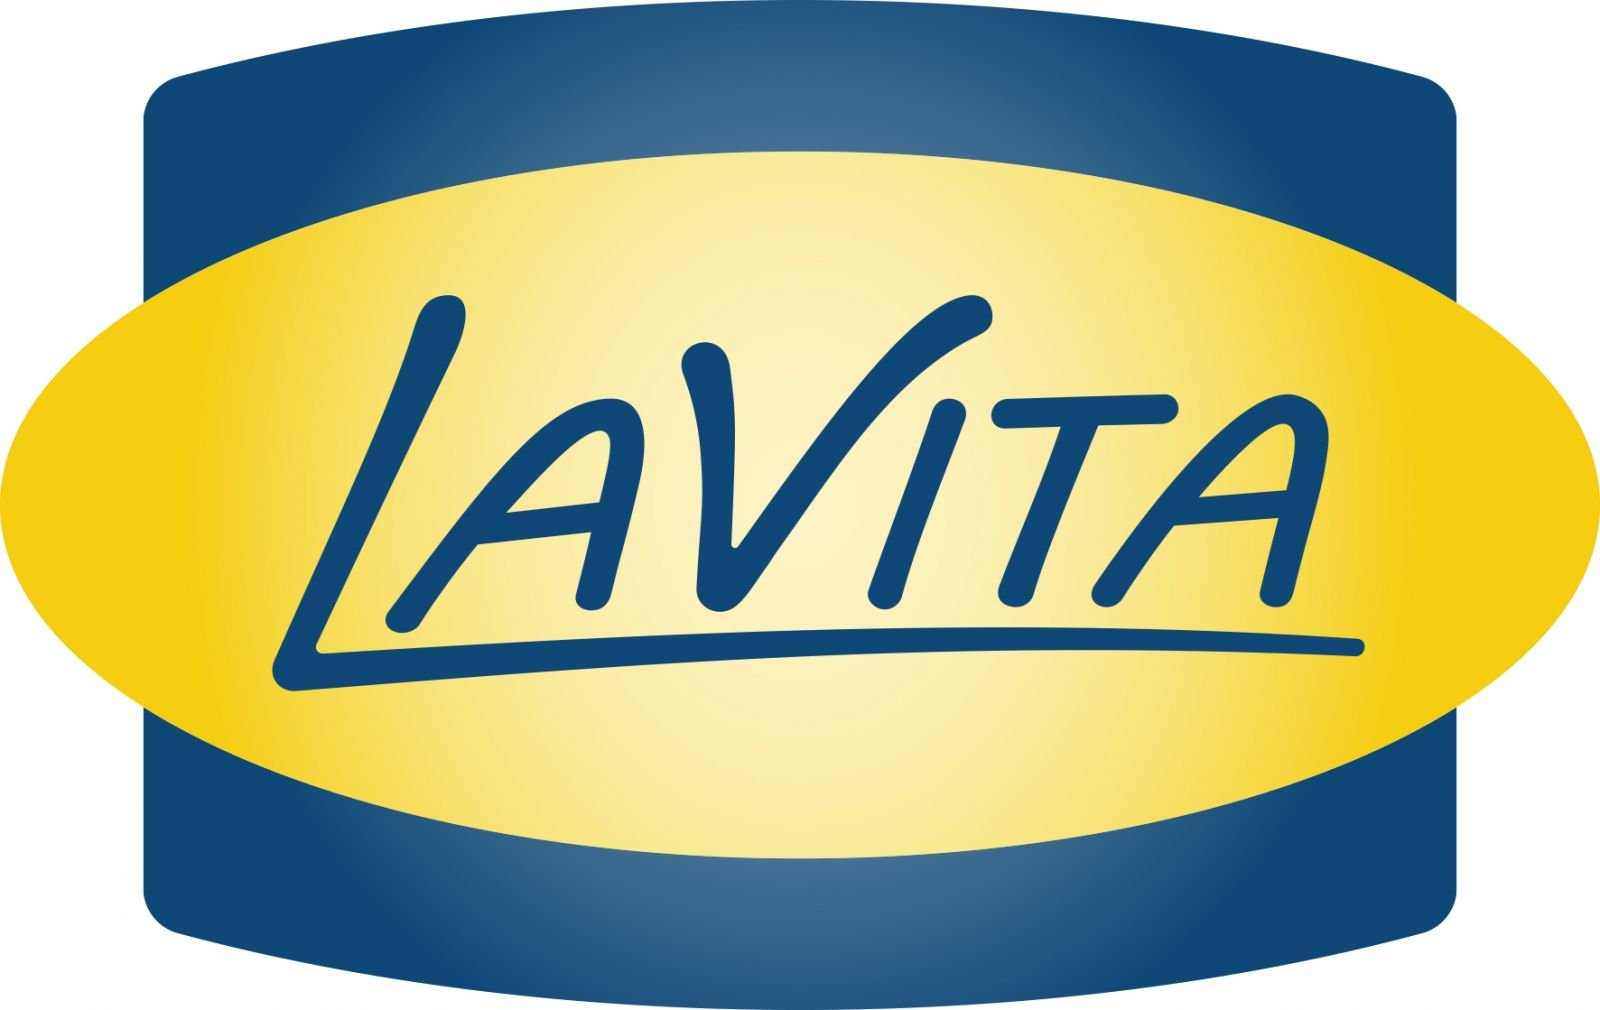 Logo Lavita